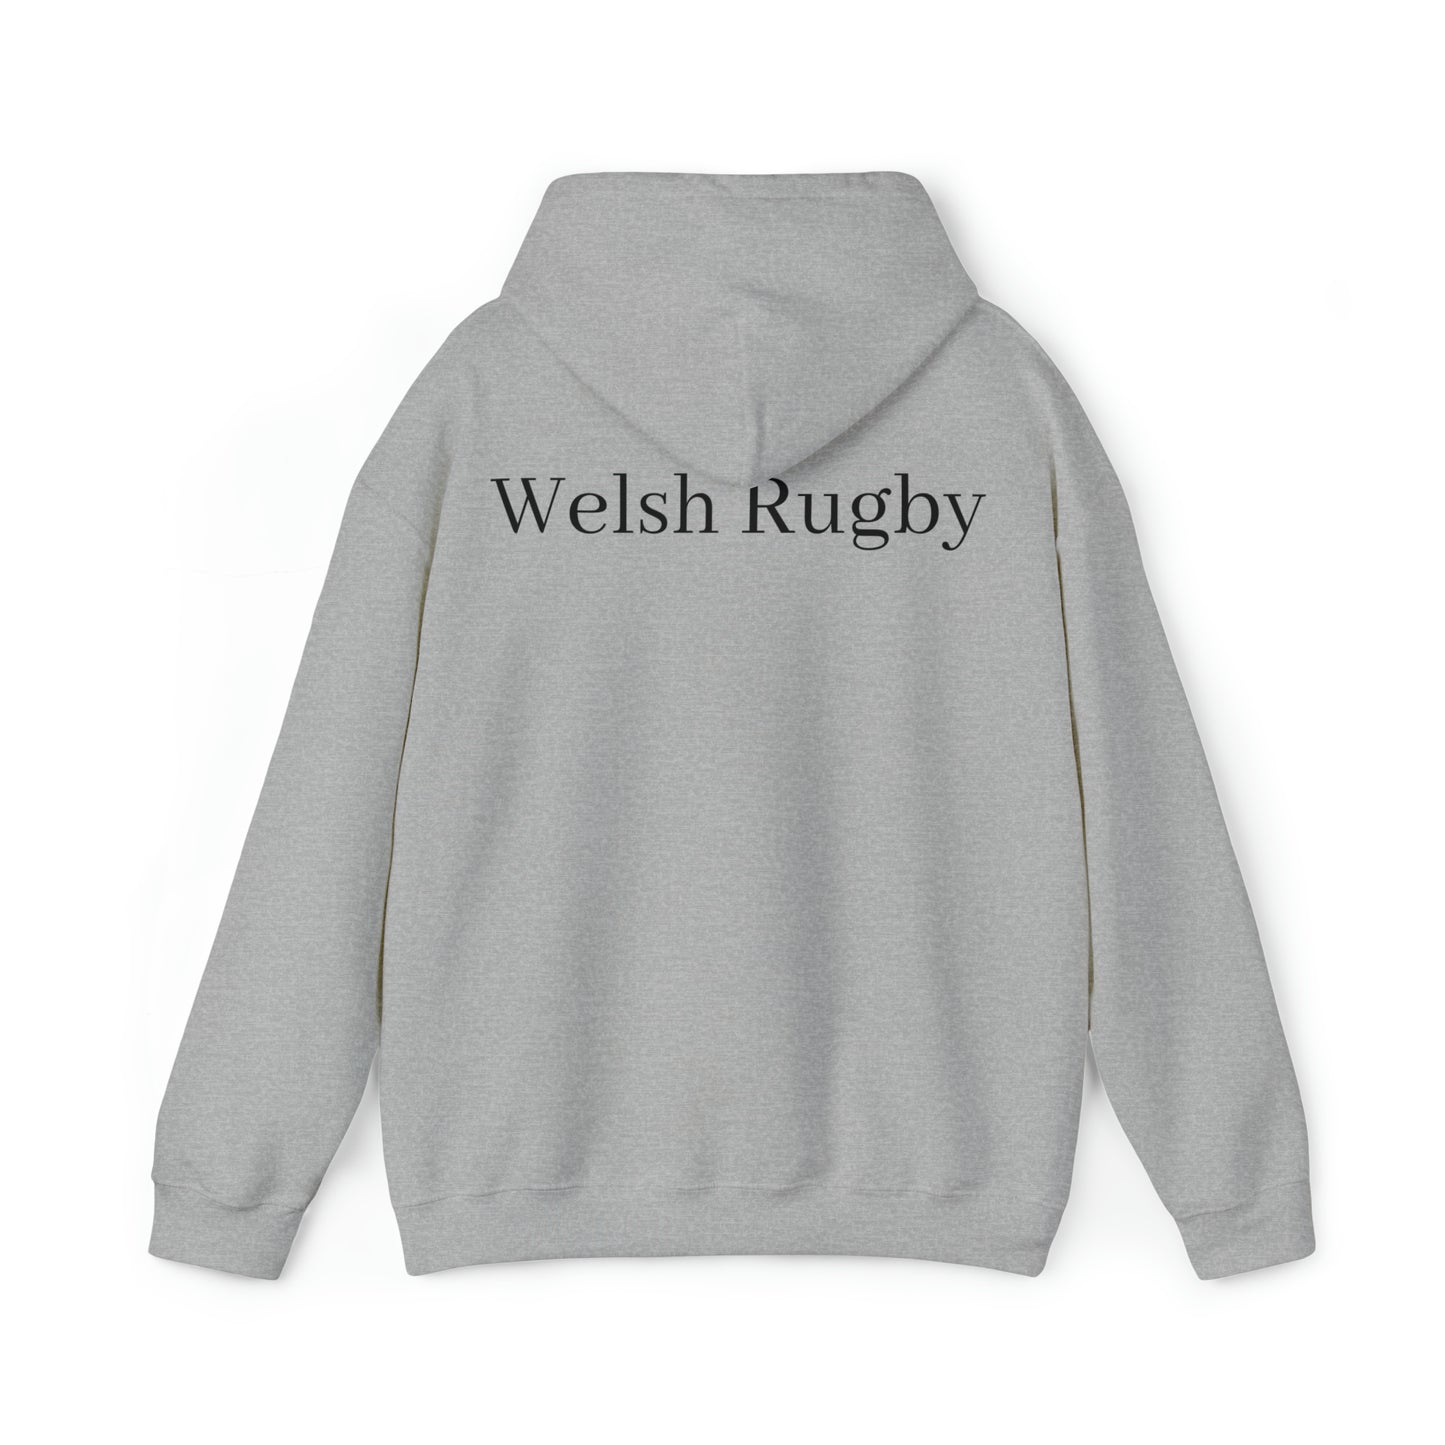 Wales Lifting RWC - light hoodies